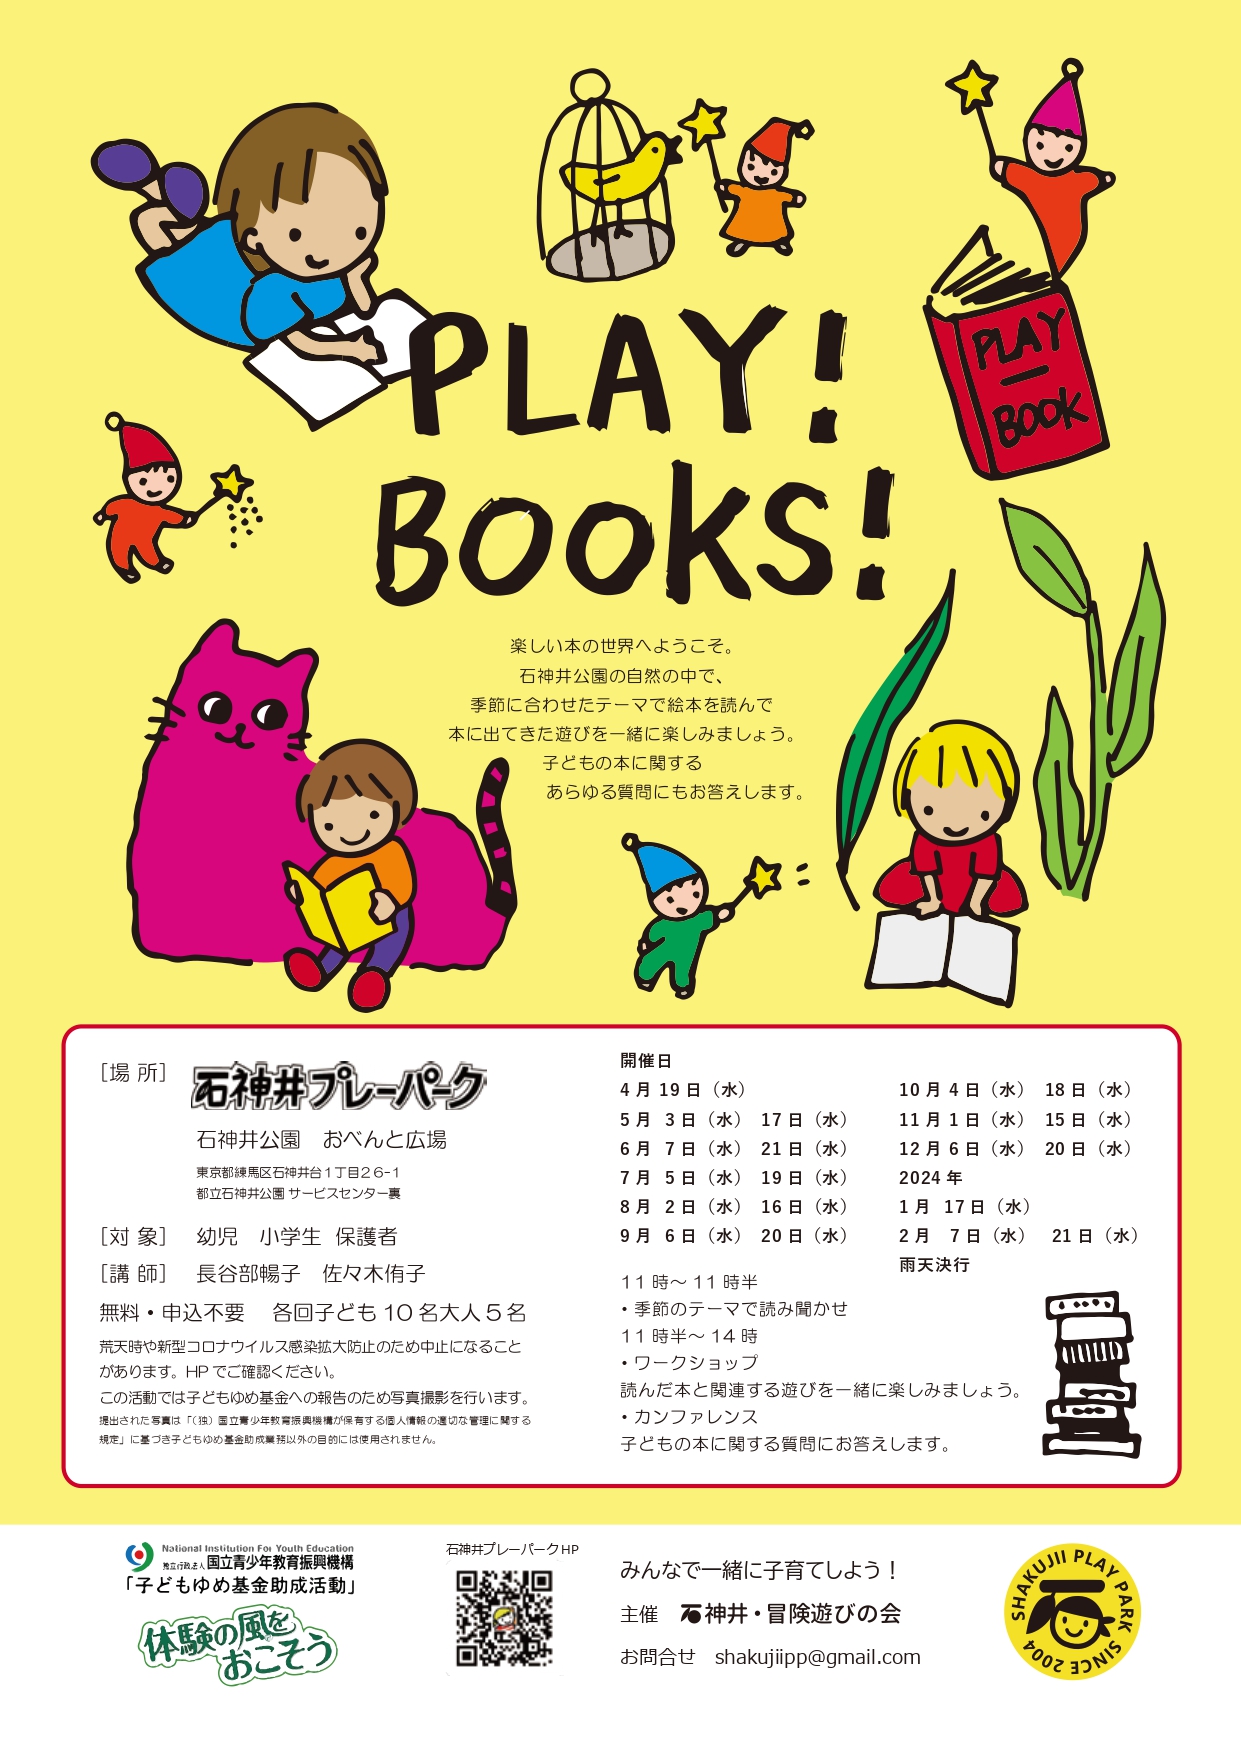 Play!Books!